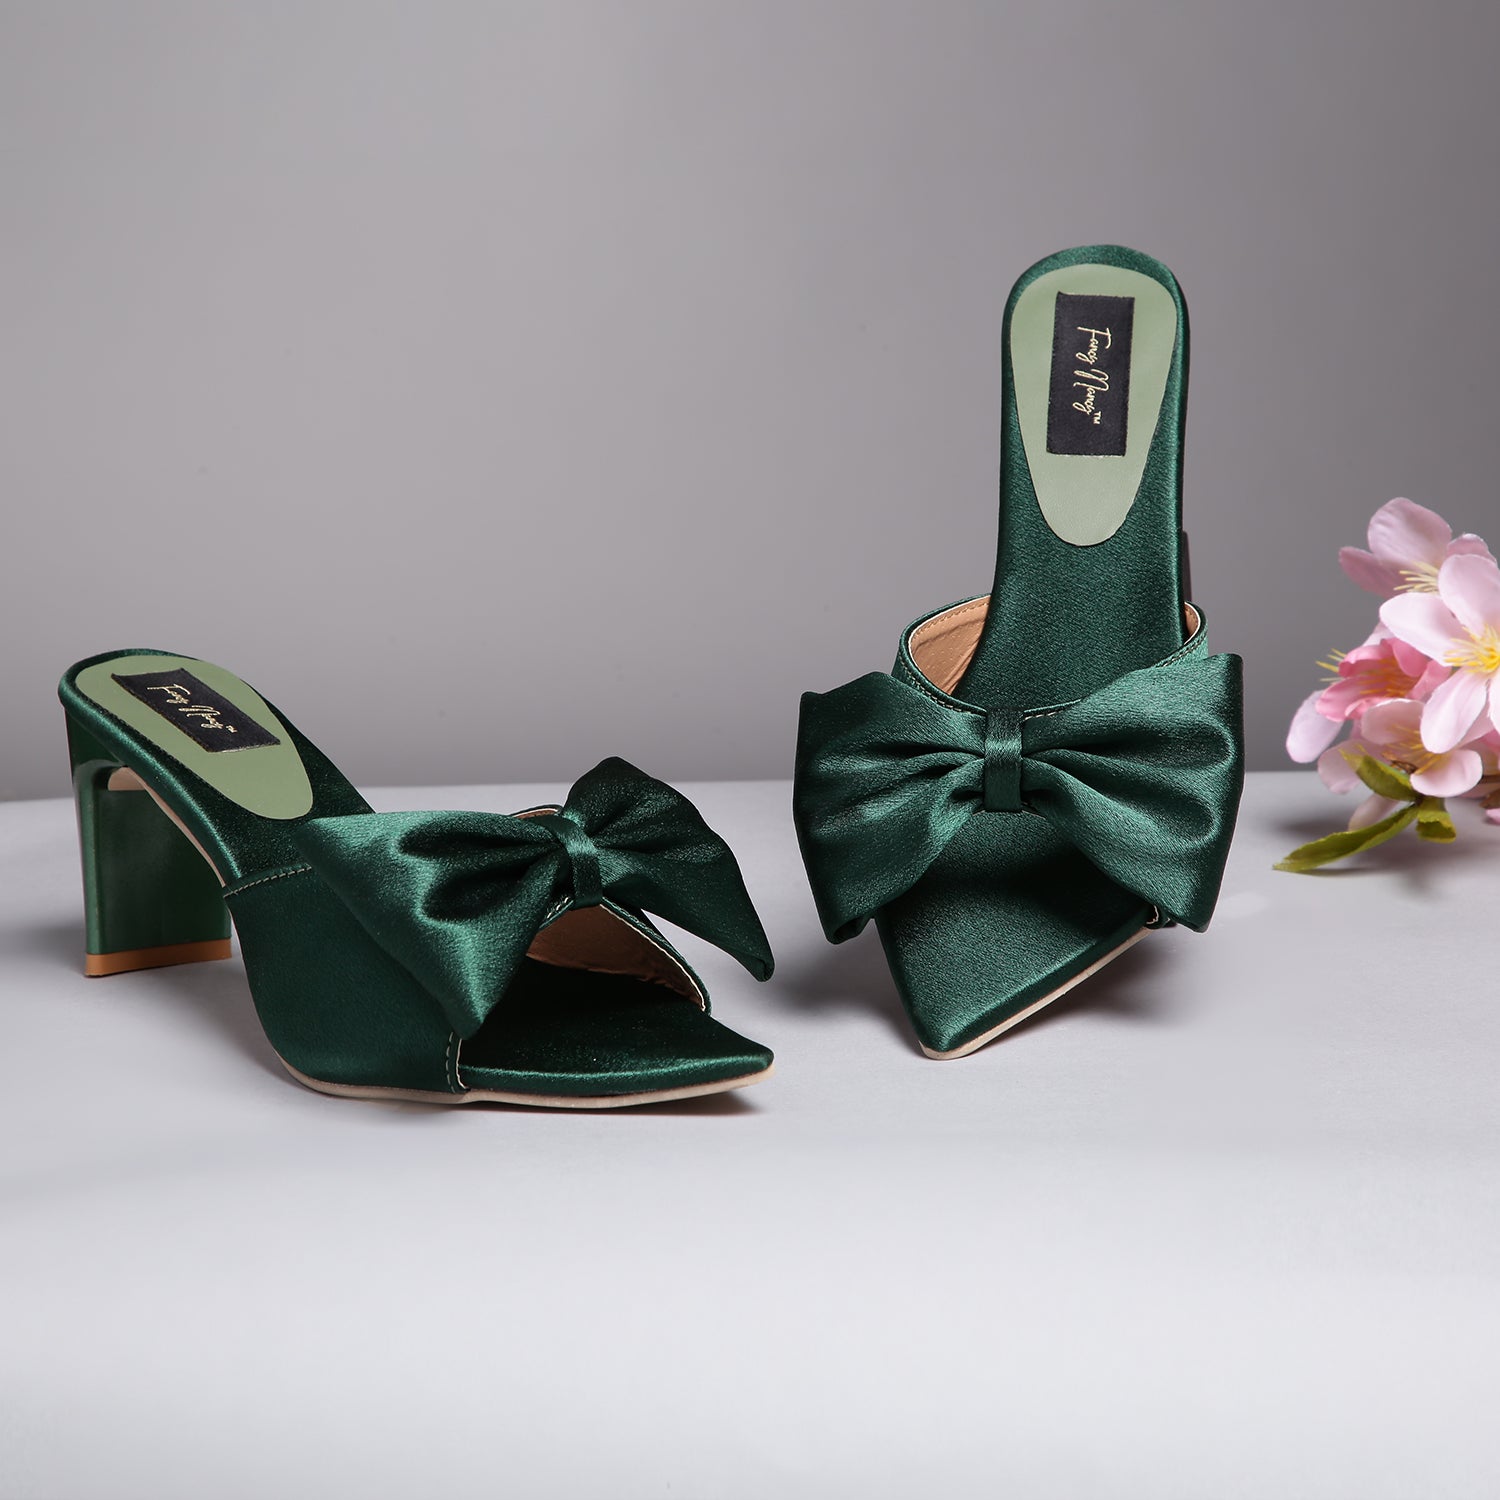 Pinterest | Green high heels, Green heels, Fashion shoes heels